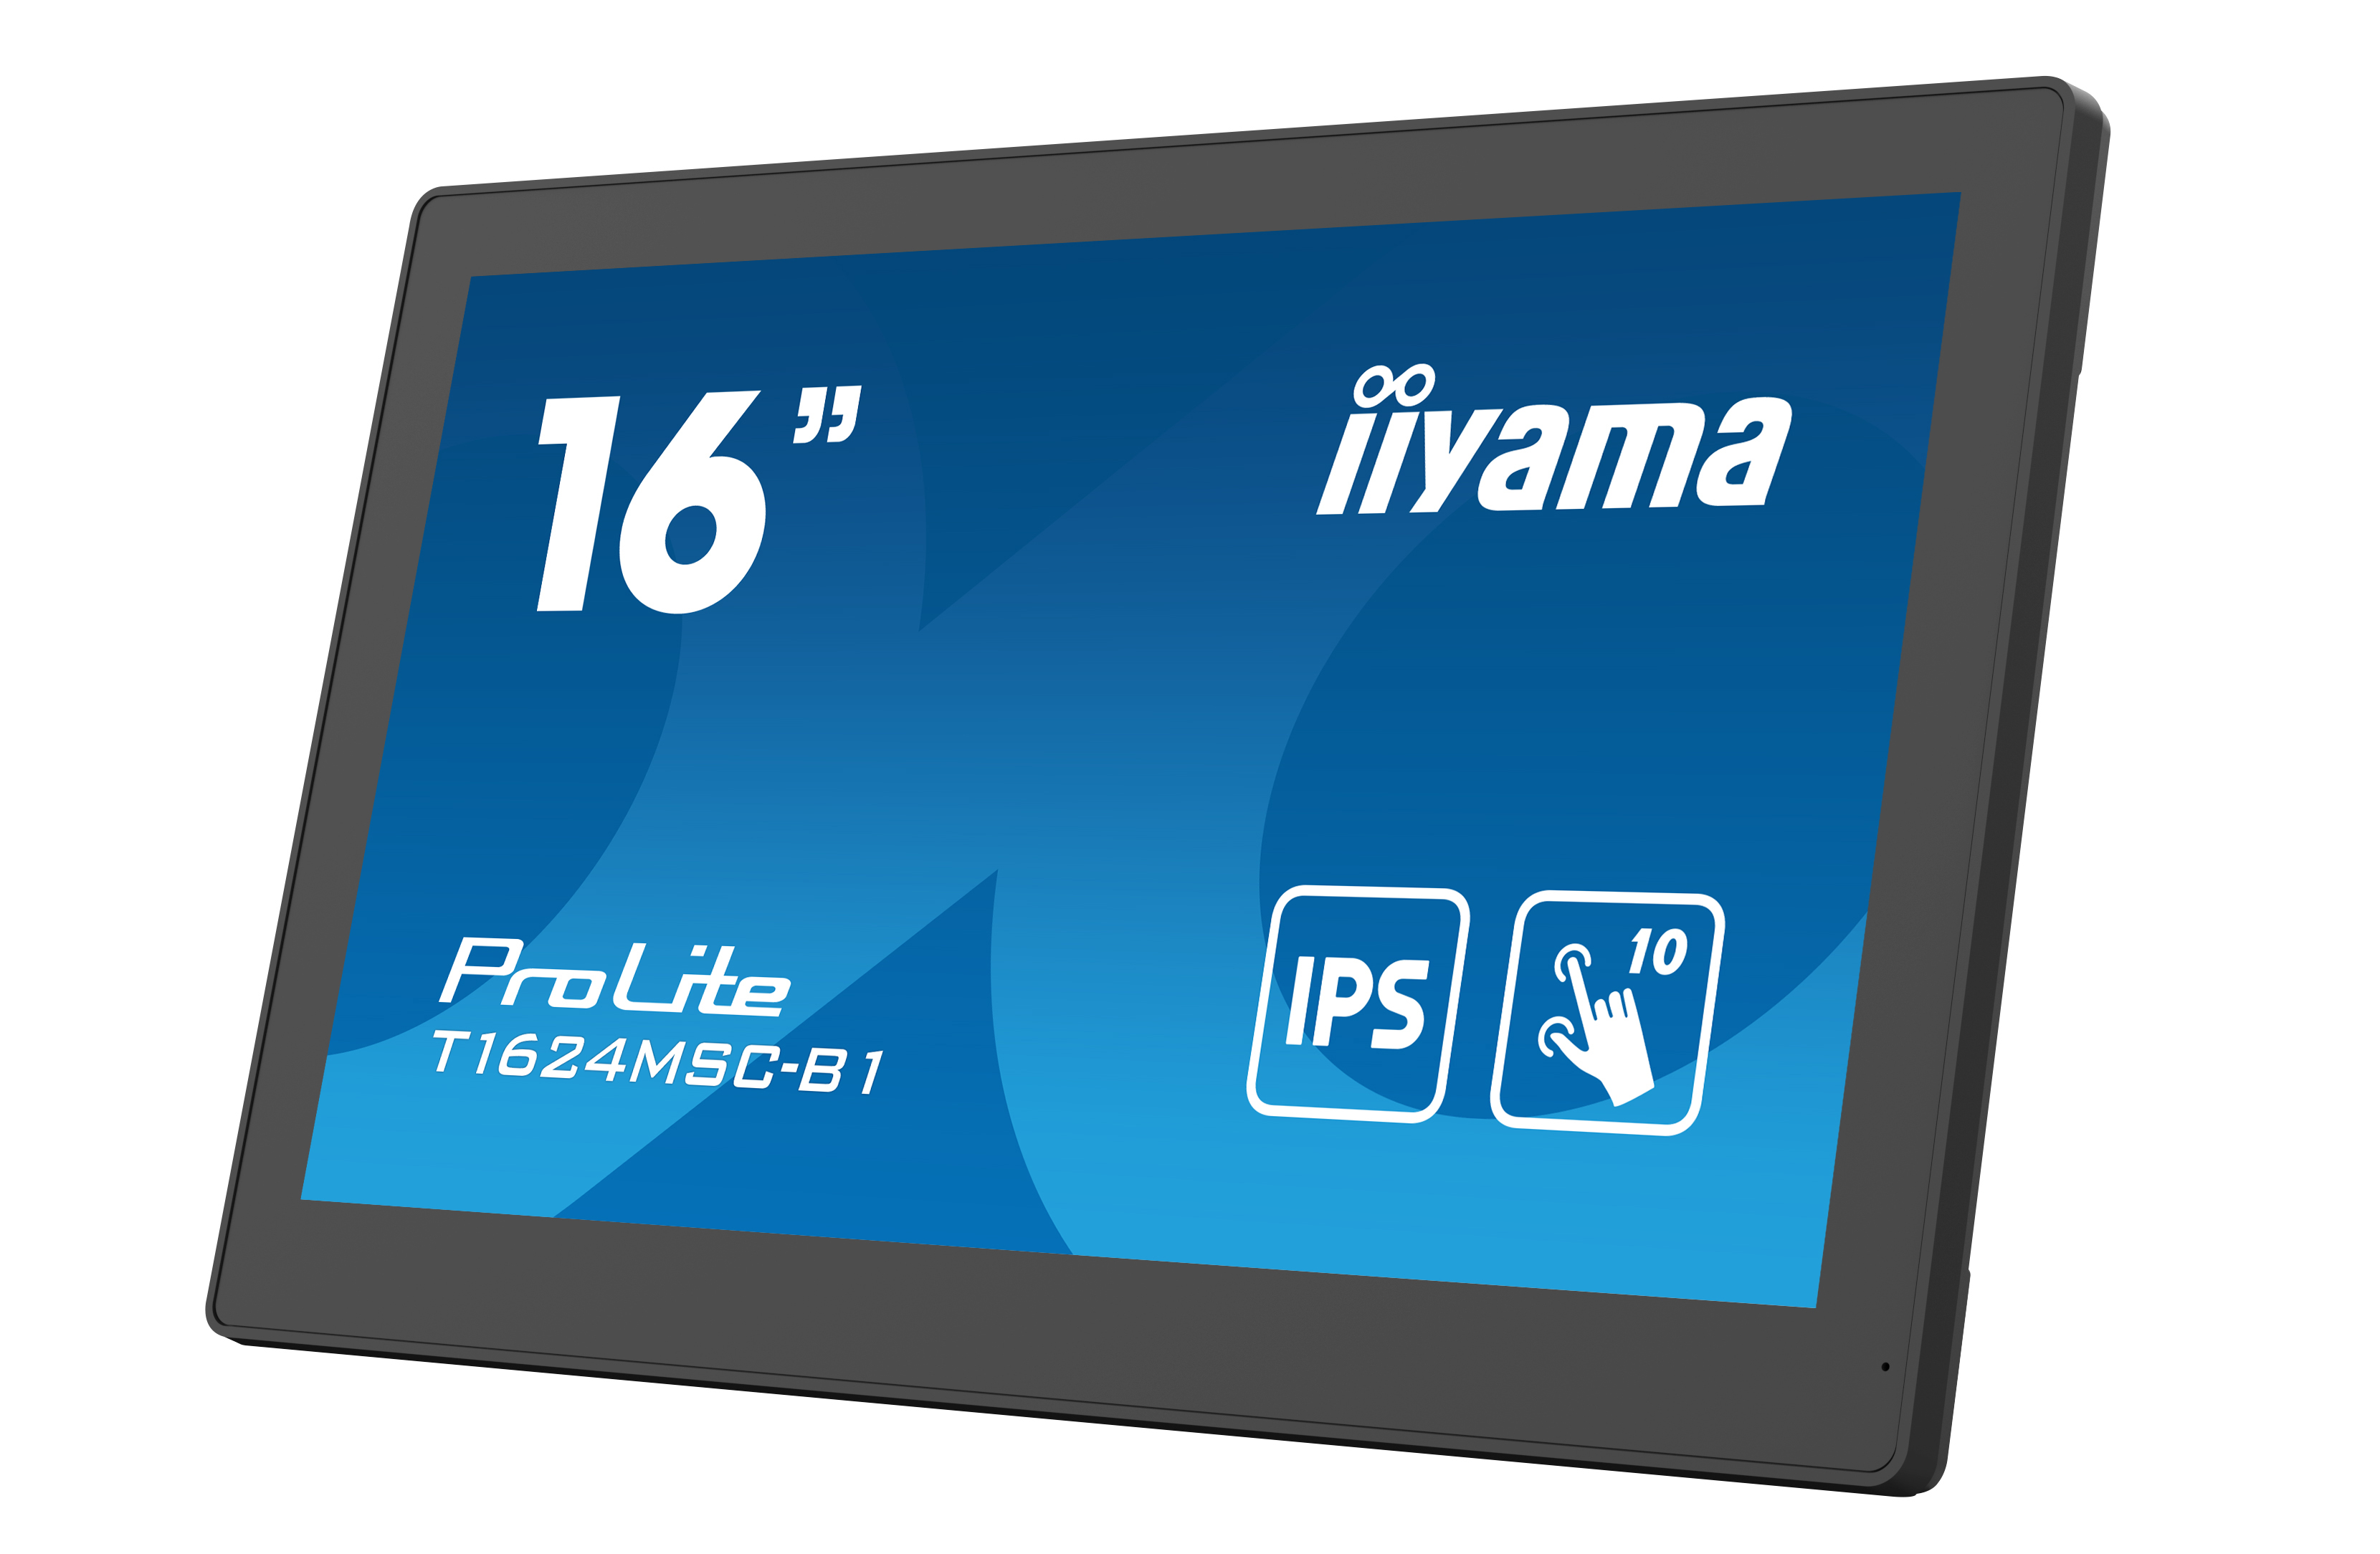 Iiyama ProLite T1624MSC-B1